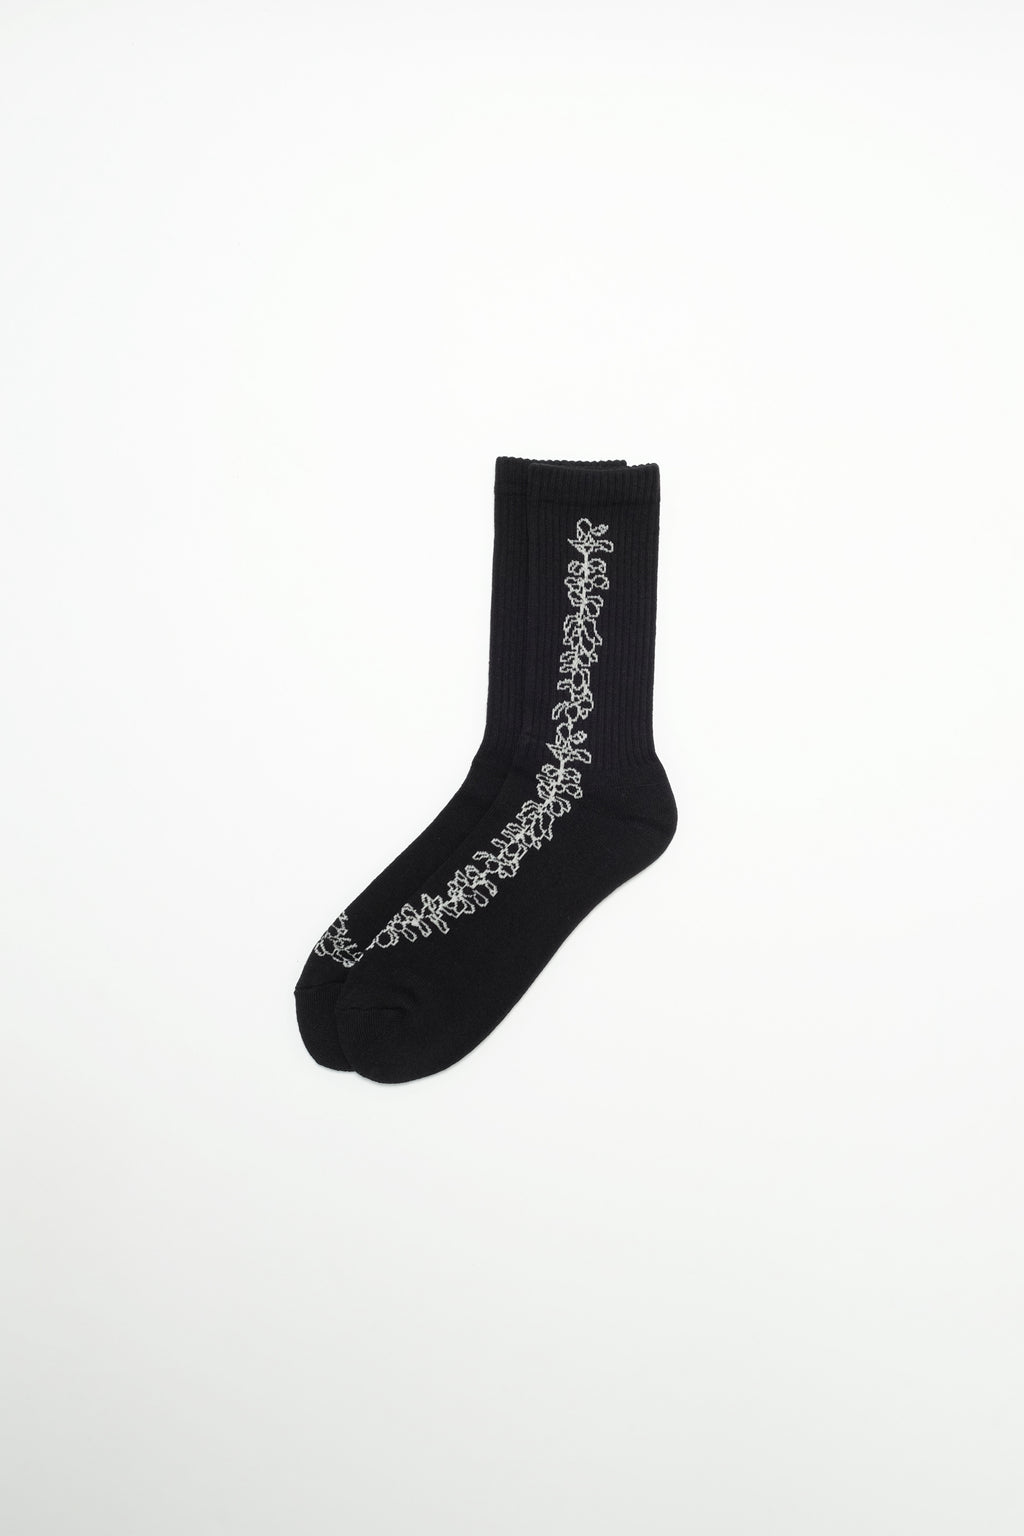 Socks - Pua - Black/Macadamia